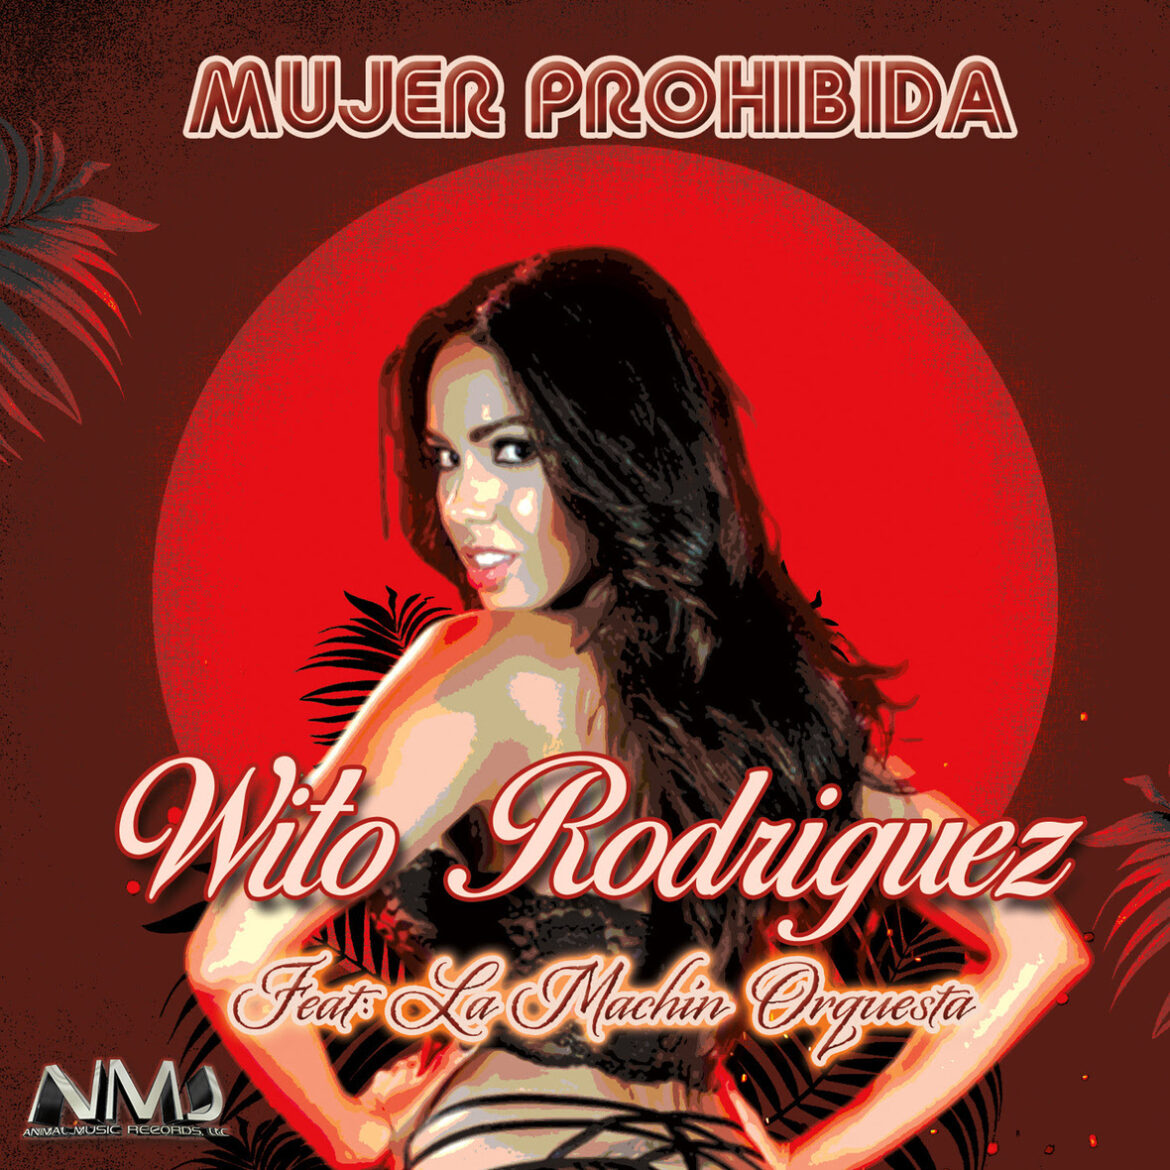 “Mujer Prohibida” lo nuevo del salsero Wito Rodríguez Feat: La Machín Orquesta